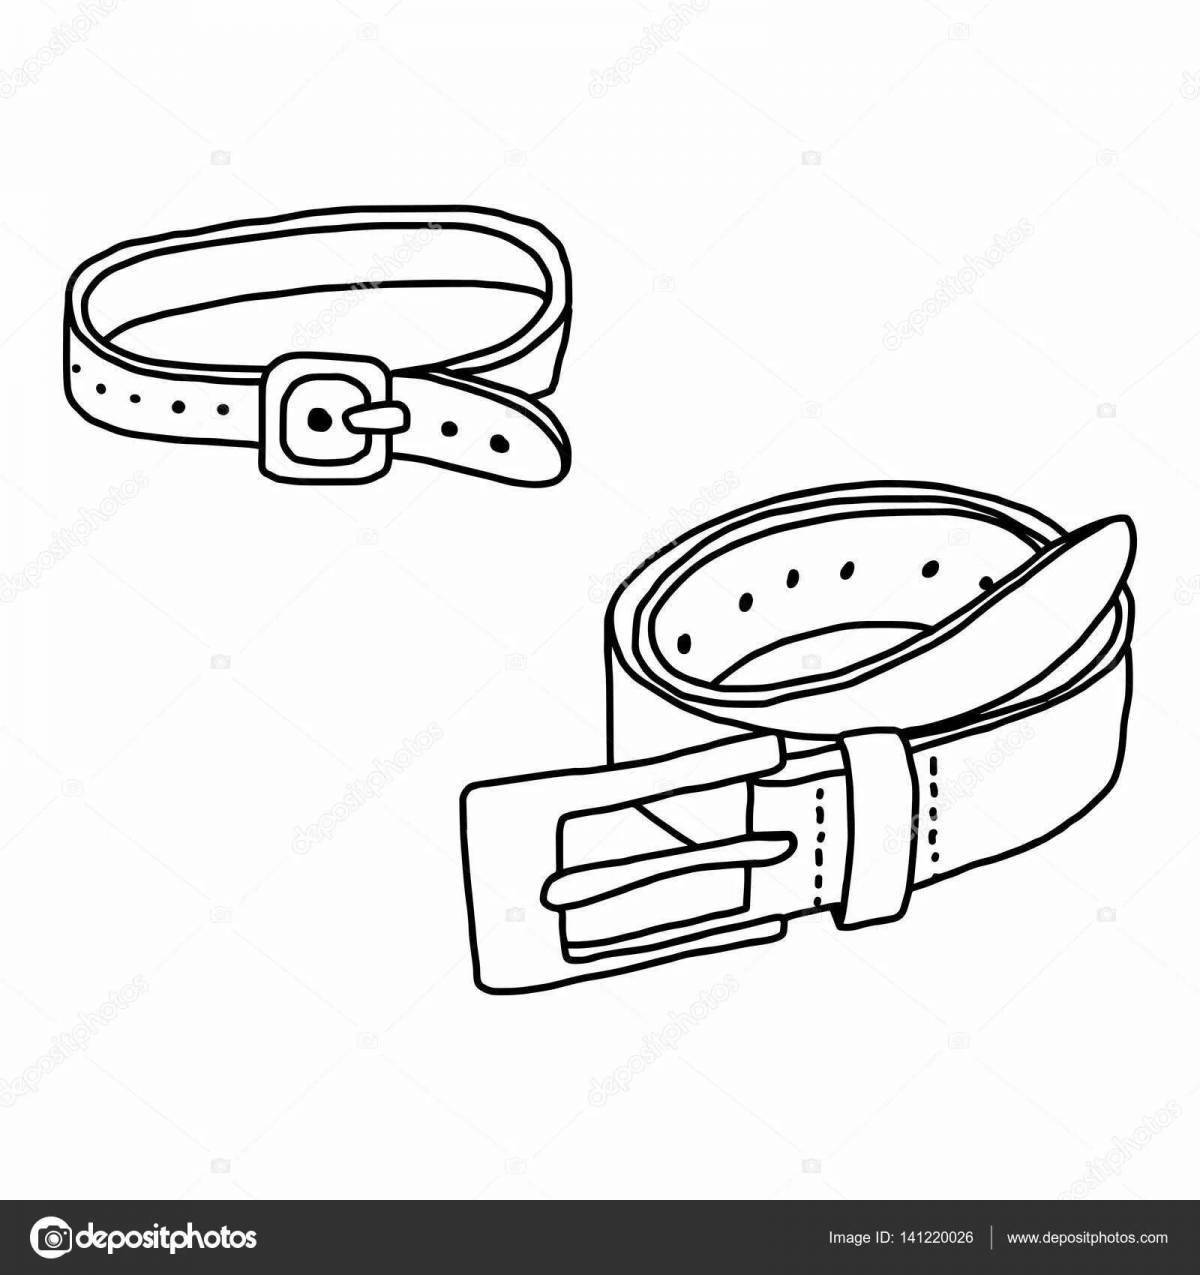 Junior belt coloring page